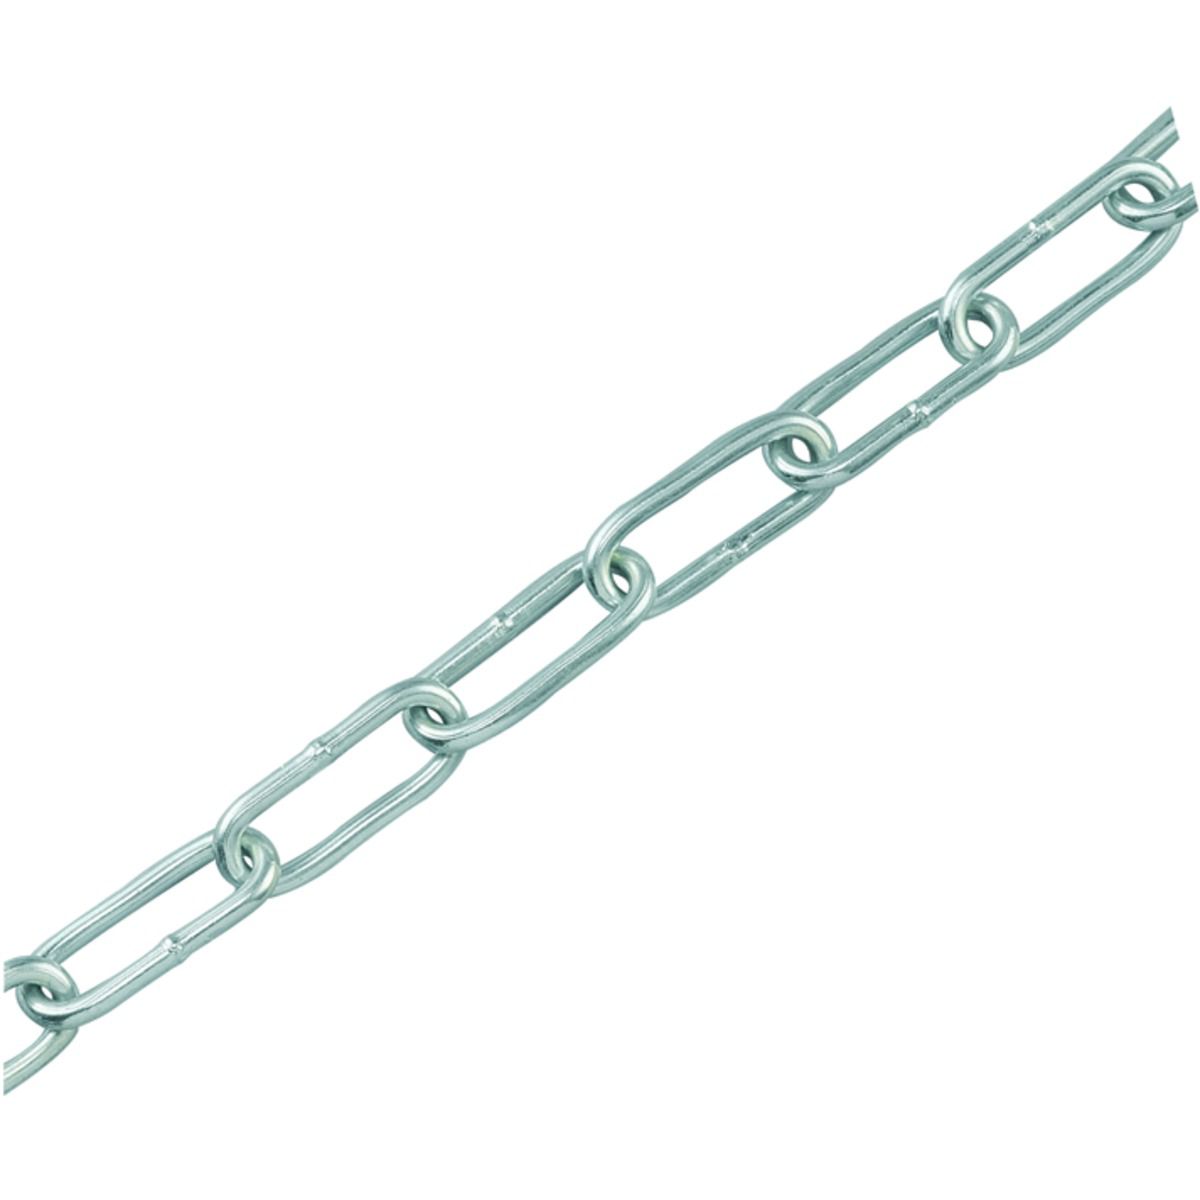 Wickes Zinc Plated Steel Welded Chain - 4 x 32mm x 2m